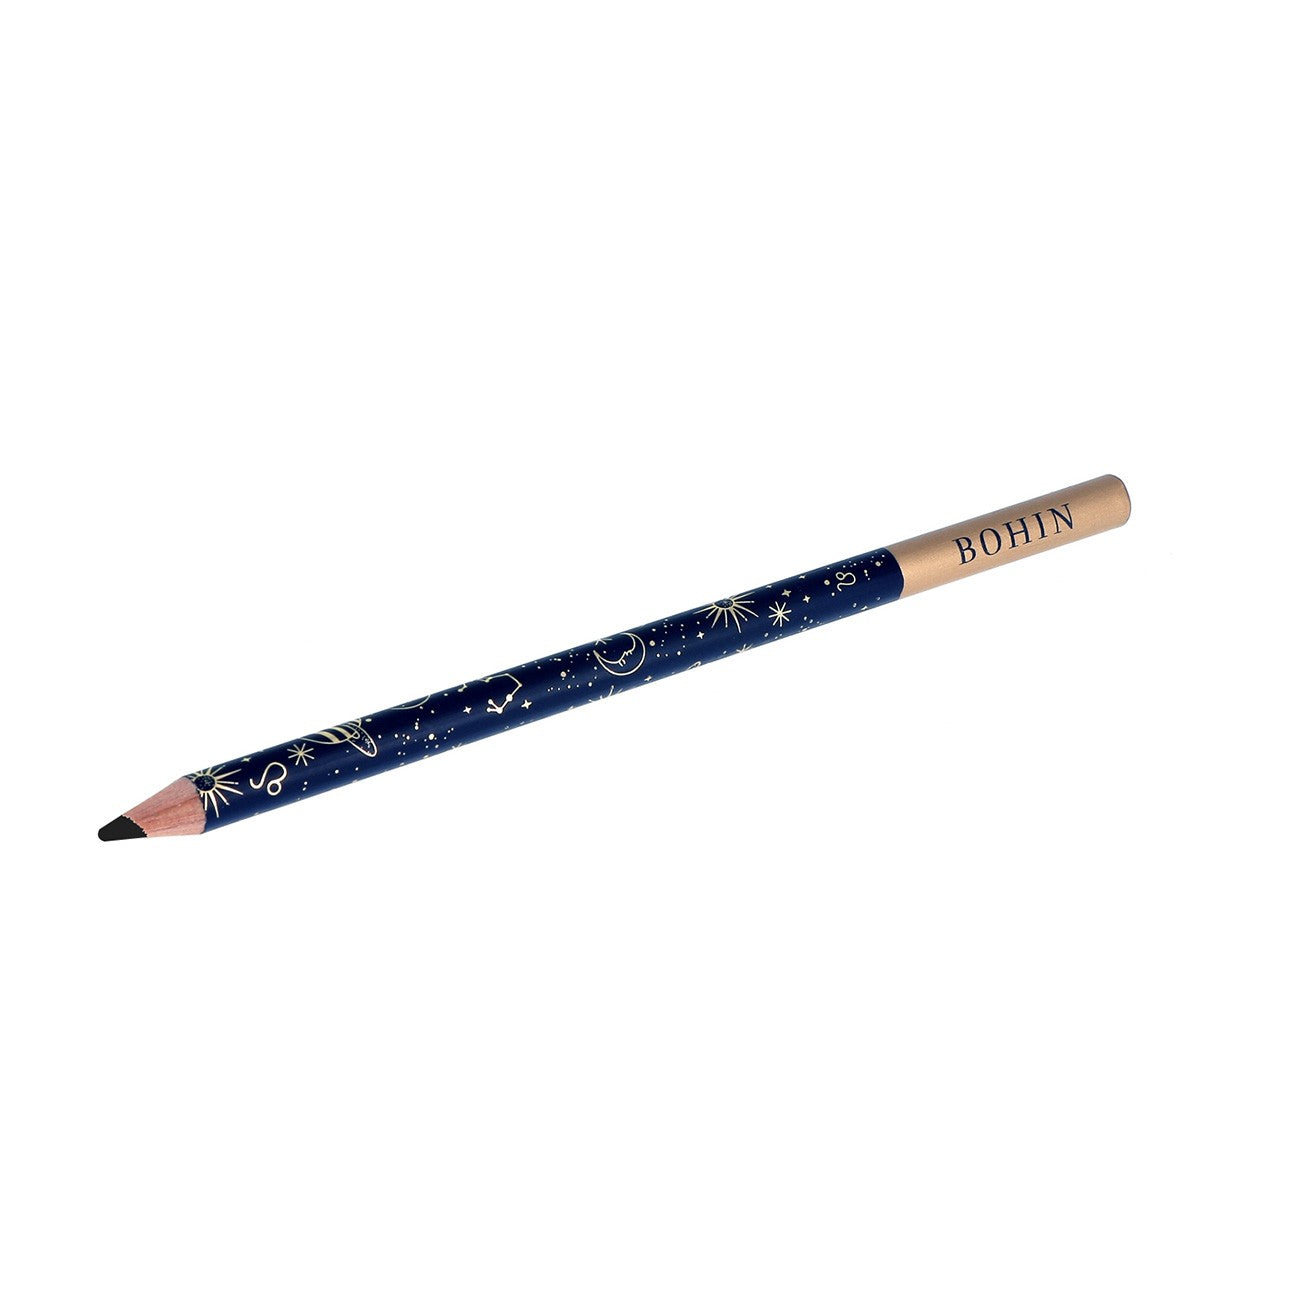 Bohin Chalk Pencil Refill – The Blanket Statement